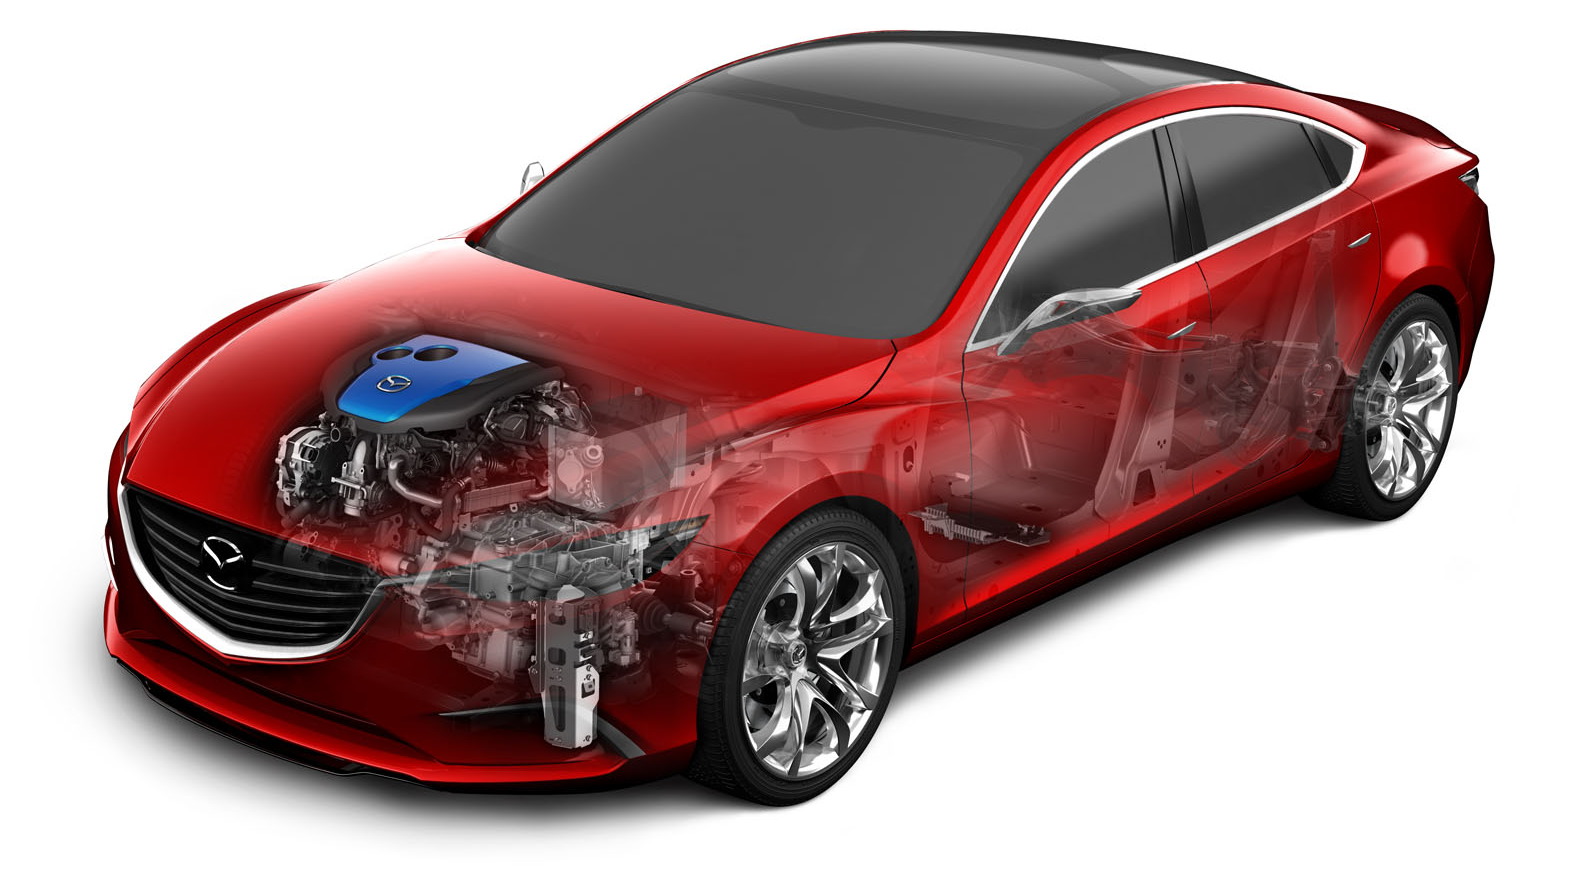 Mazda i-ELOOP regenerative braking system with capacitor storage